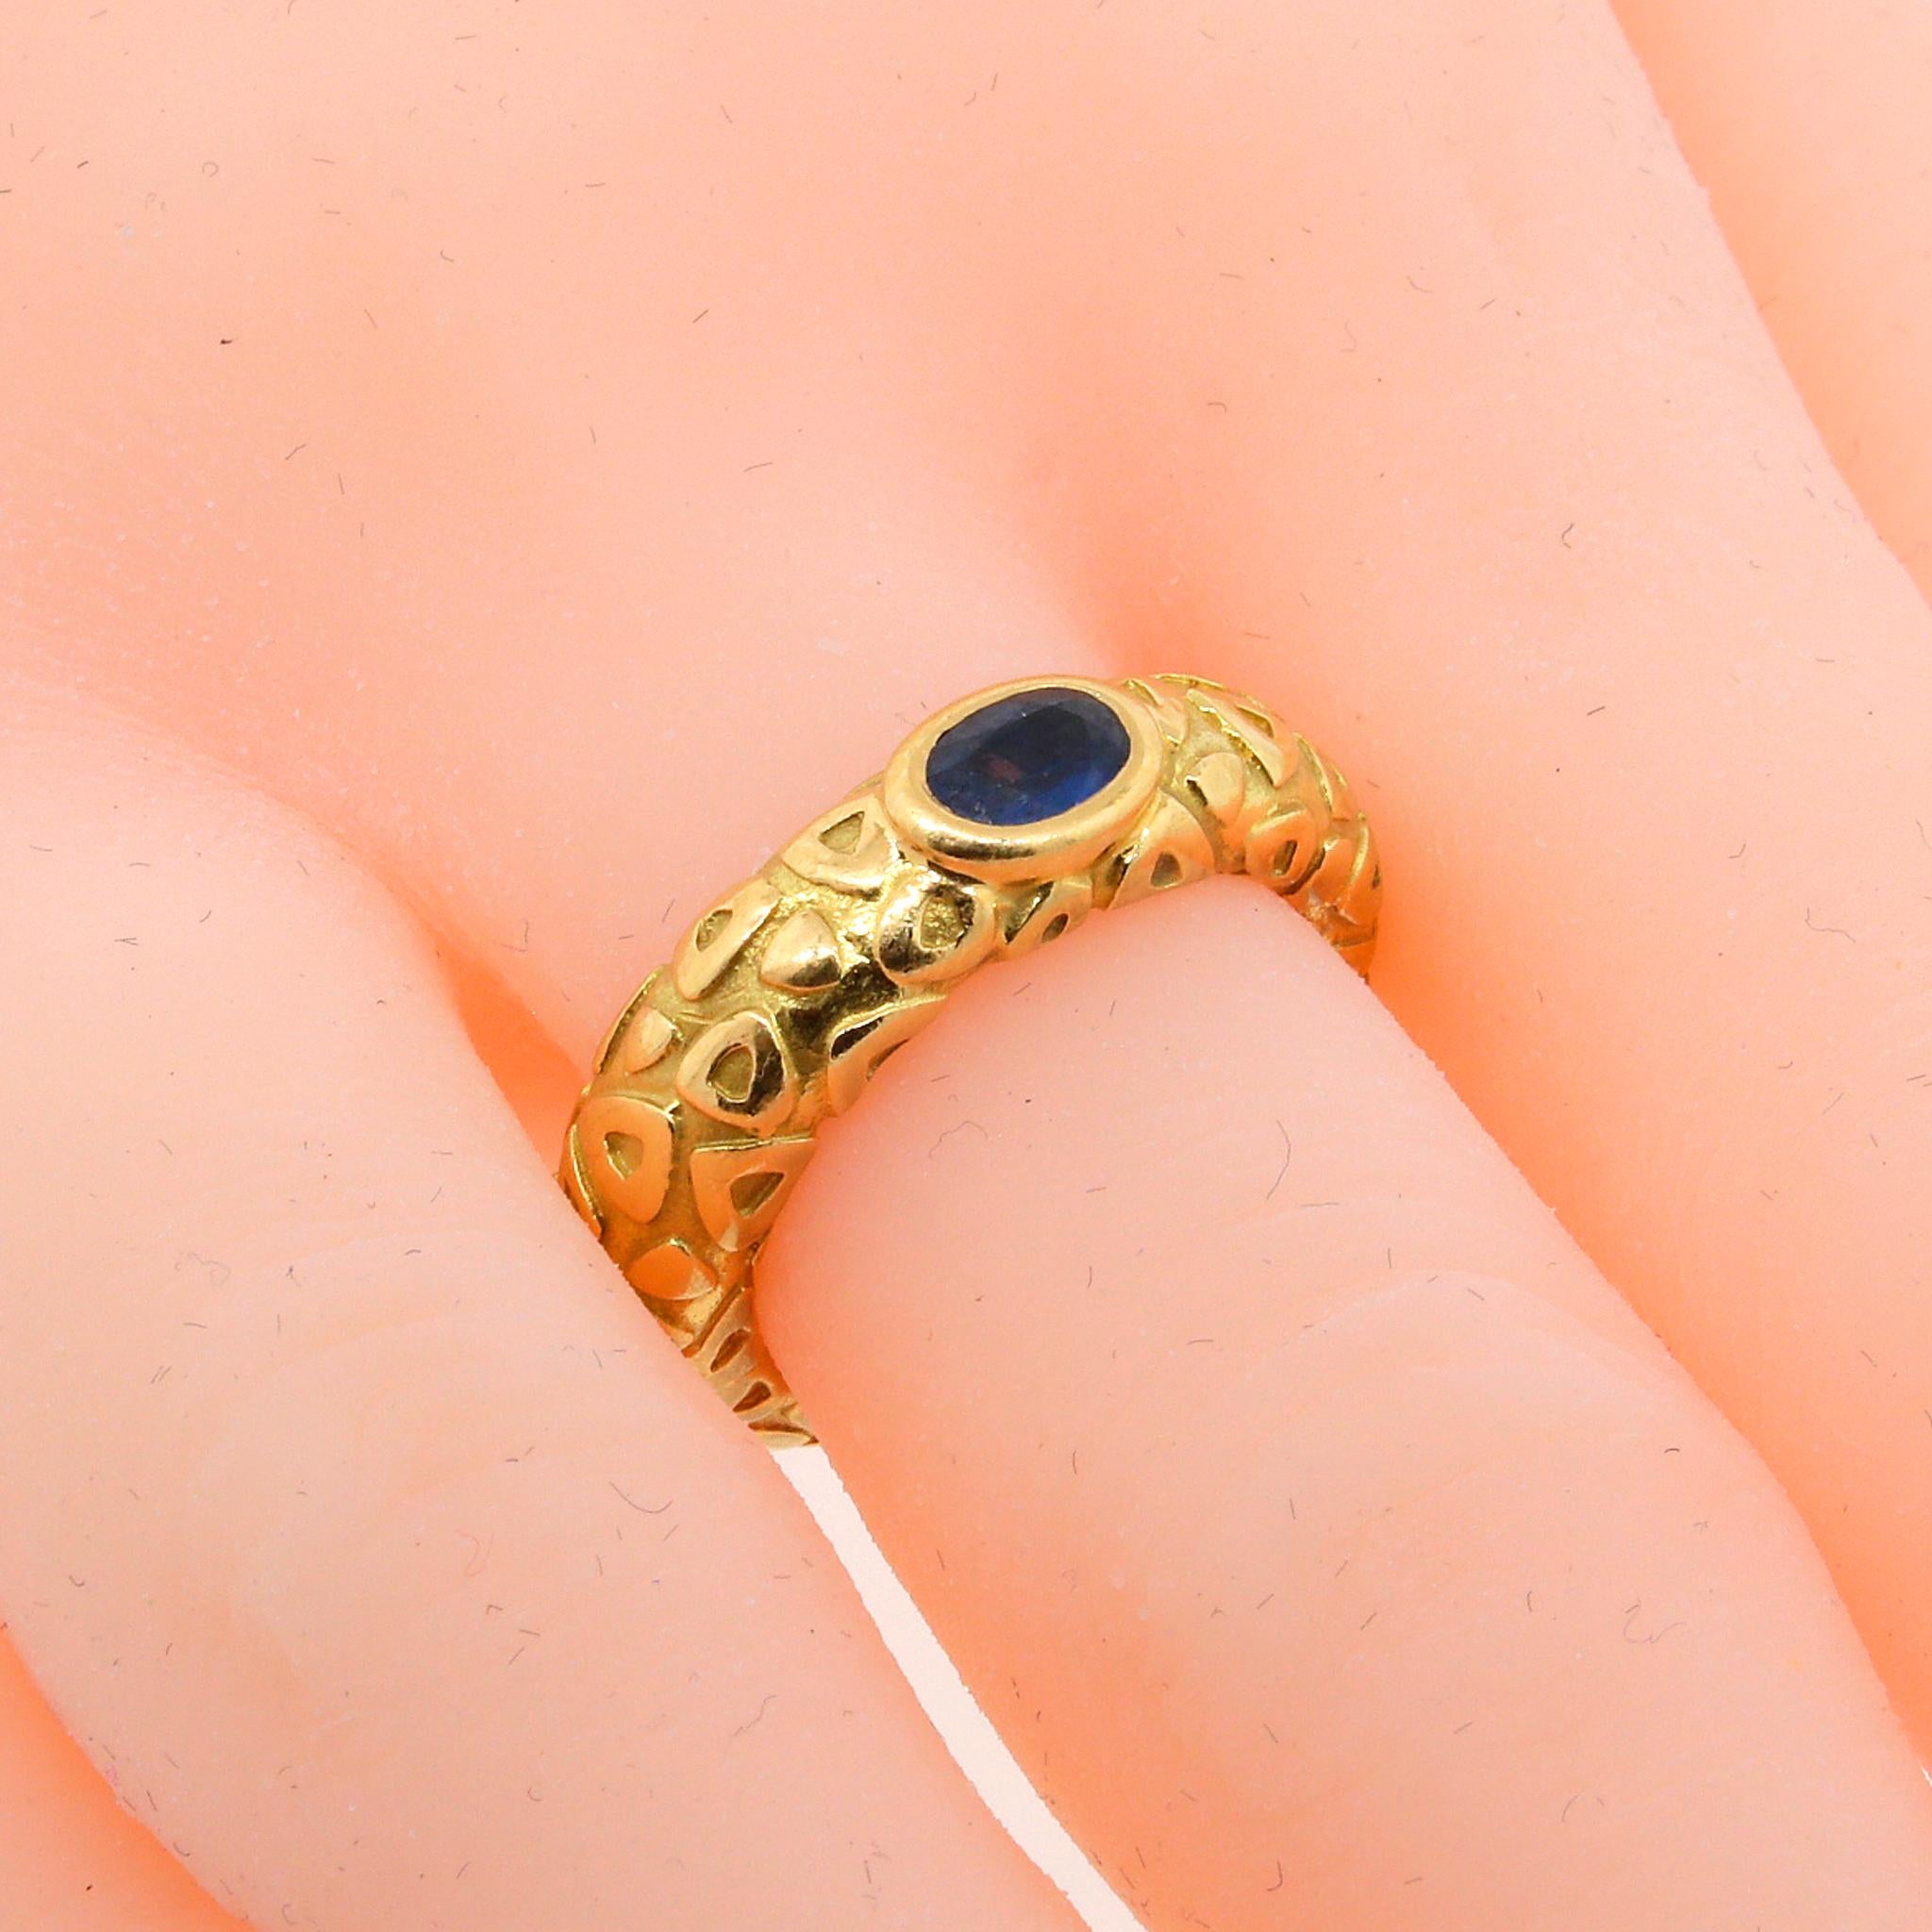 chaumet sapphire ring